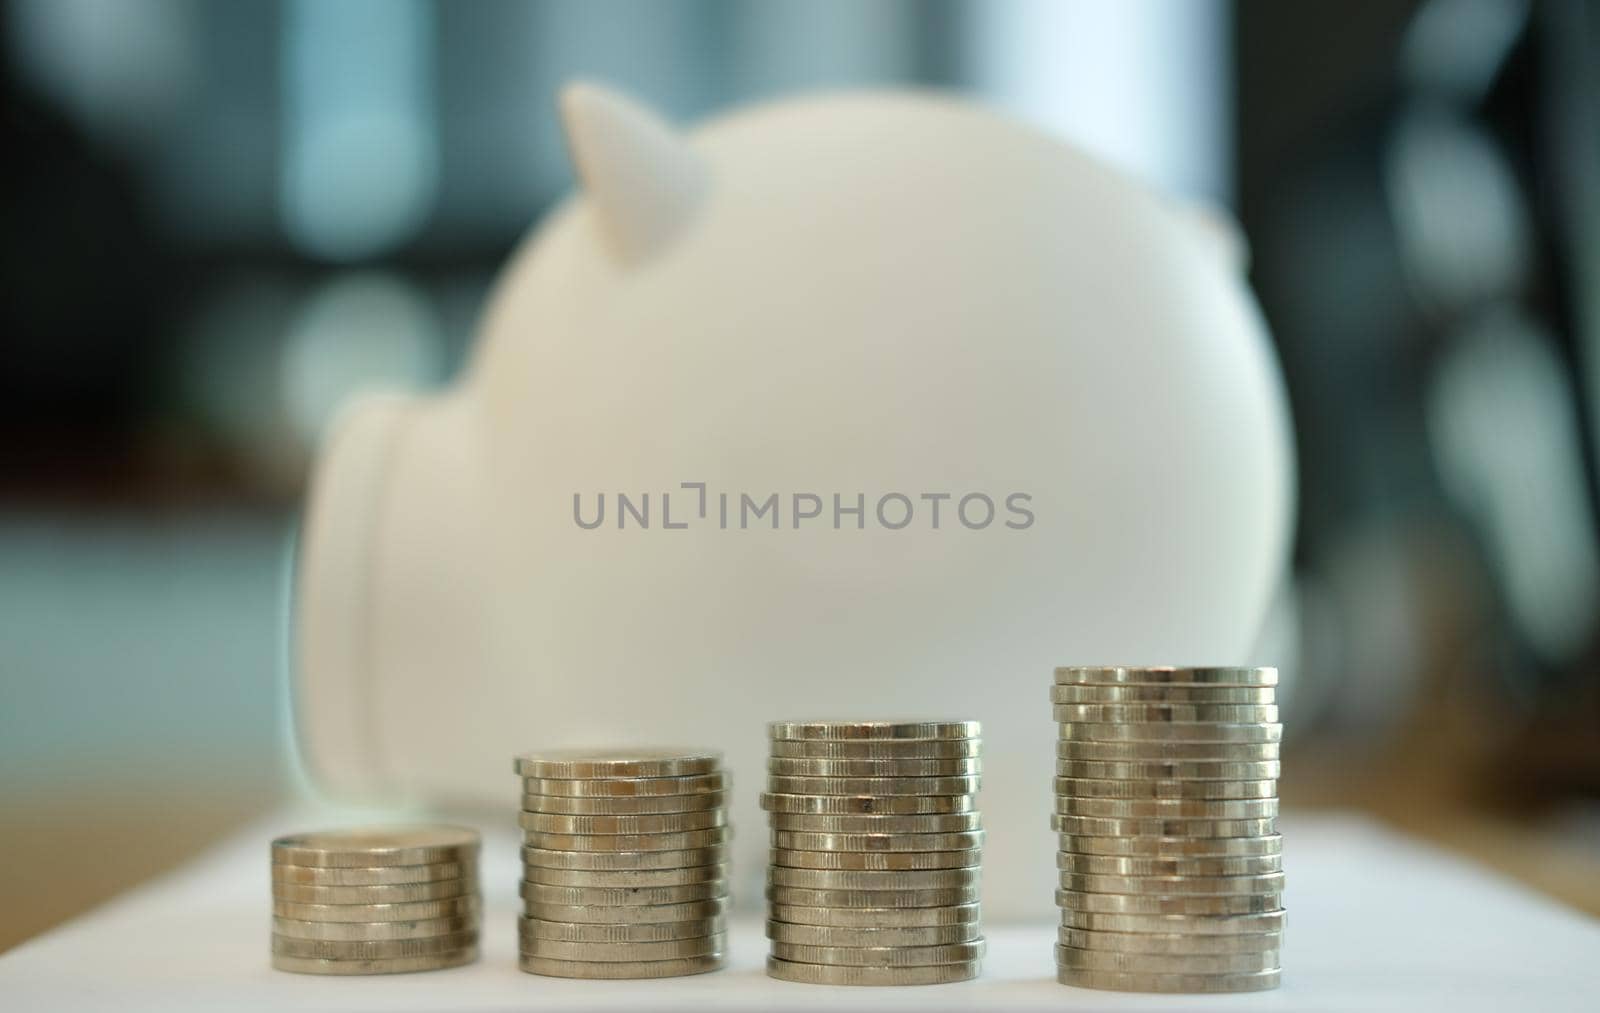 coin & white piggy bank. money savings, cash deposit concept